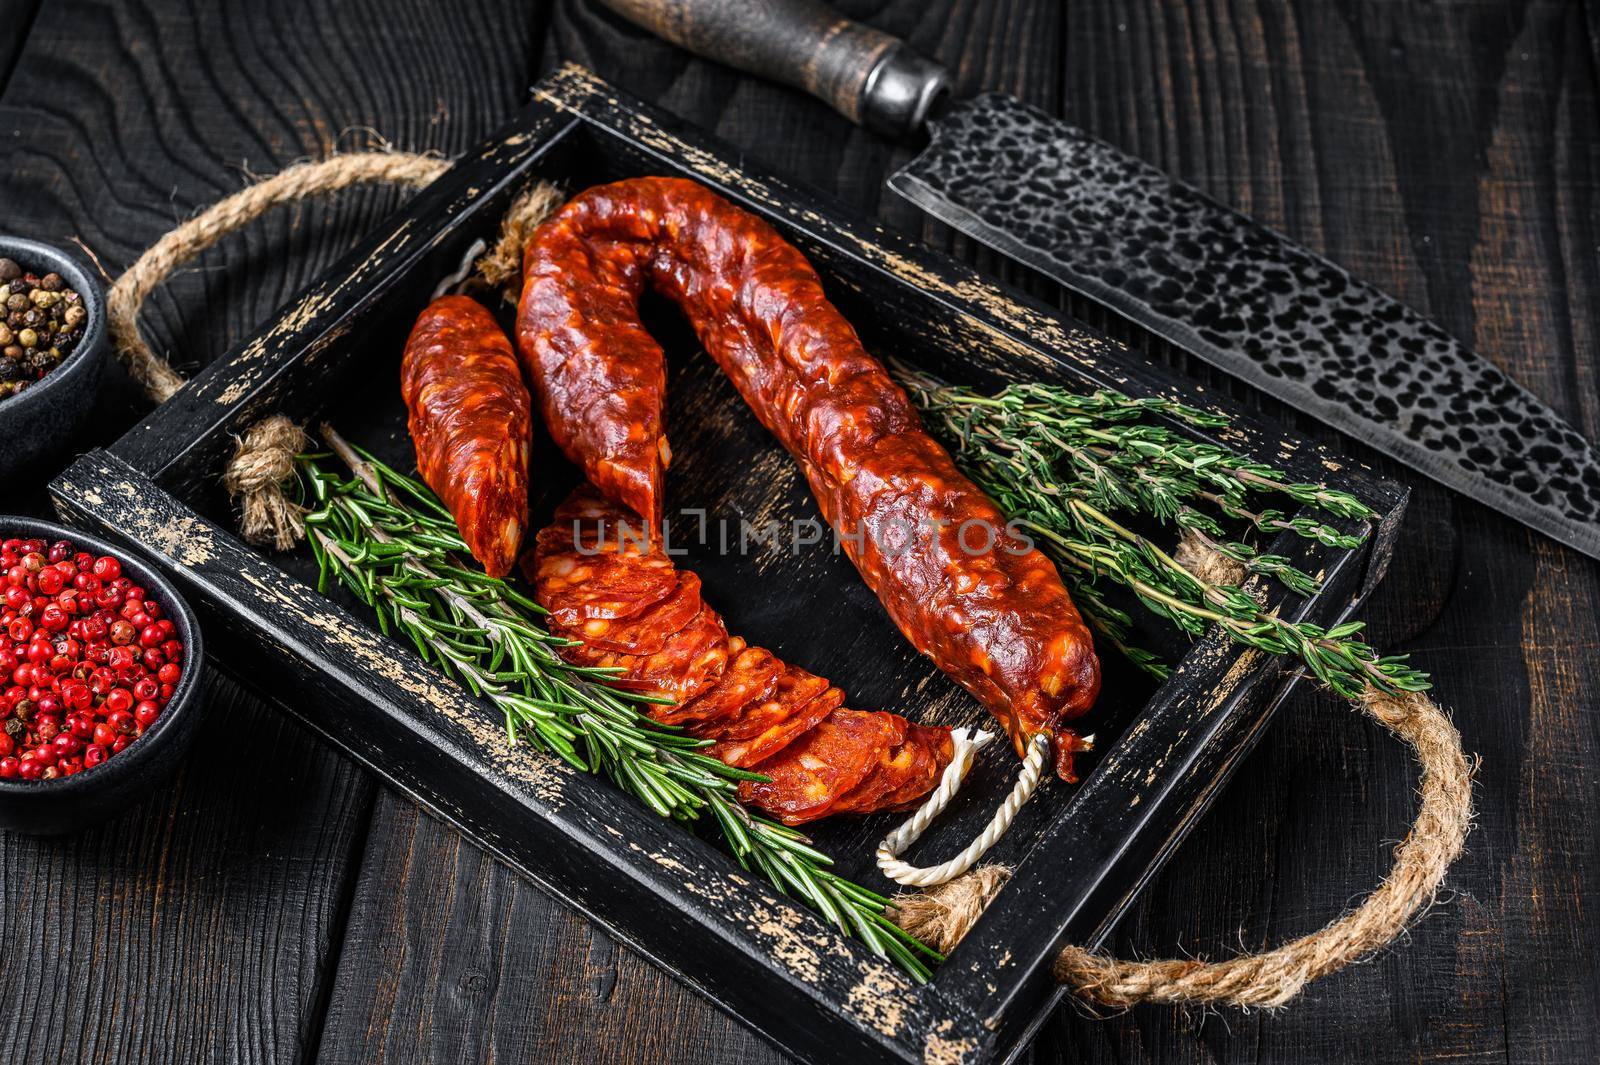 Sliced chorizo salami, Spanish traditional chorizo sausage. Black wooden background. Top view.